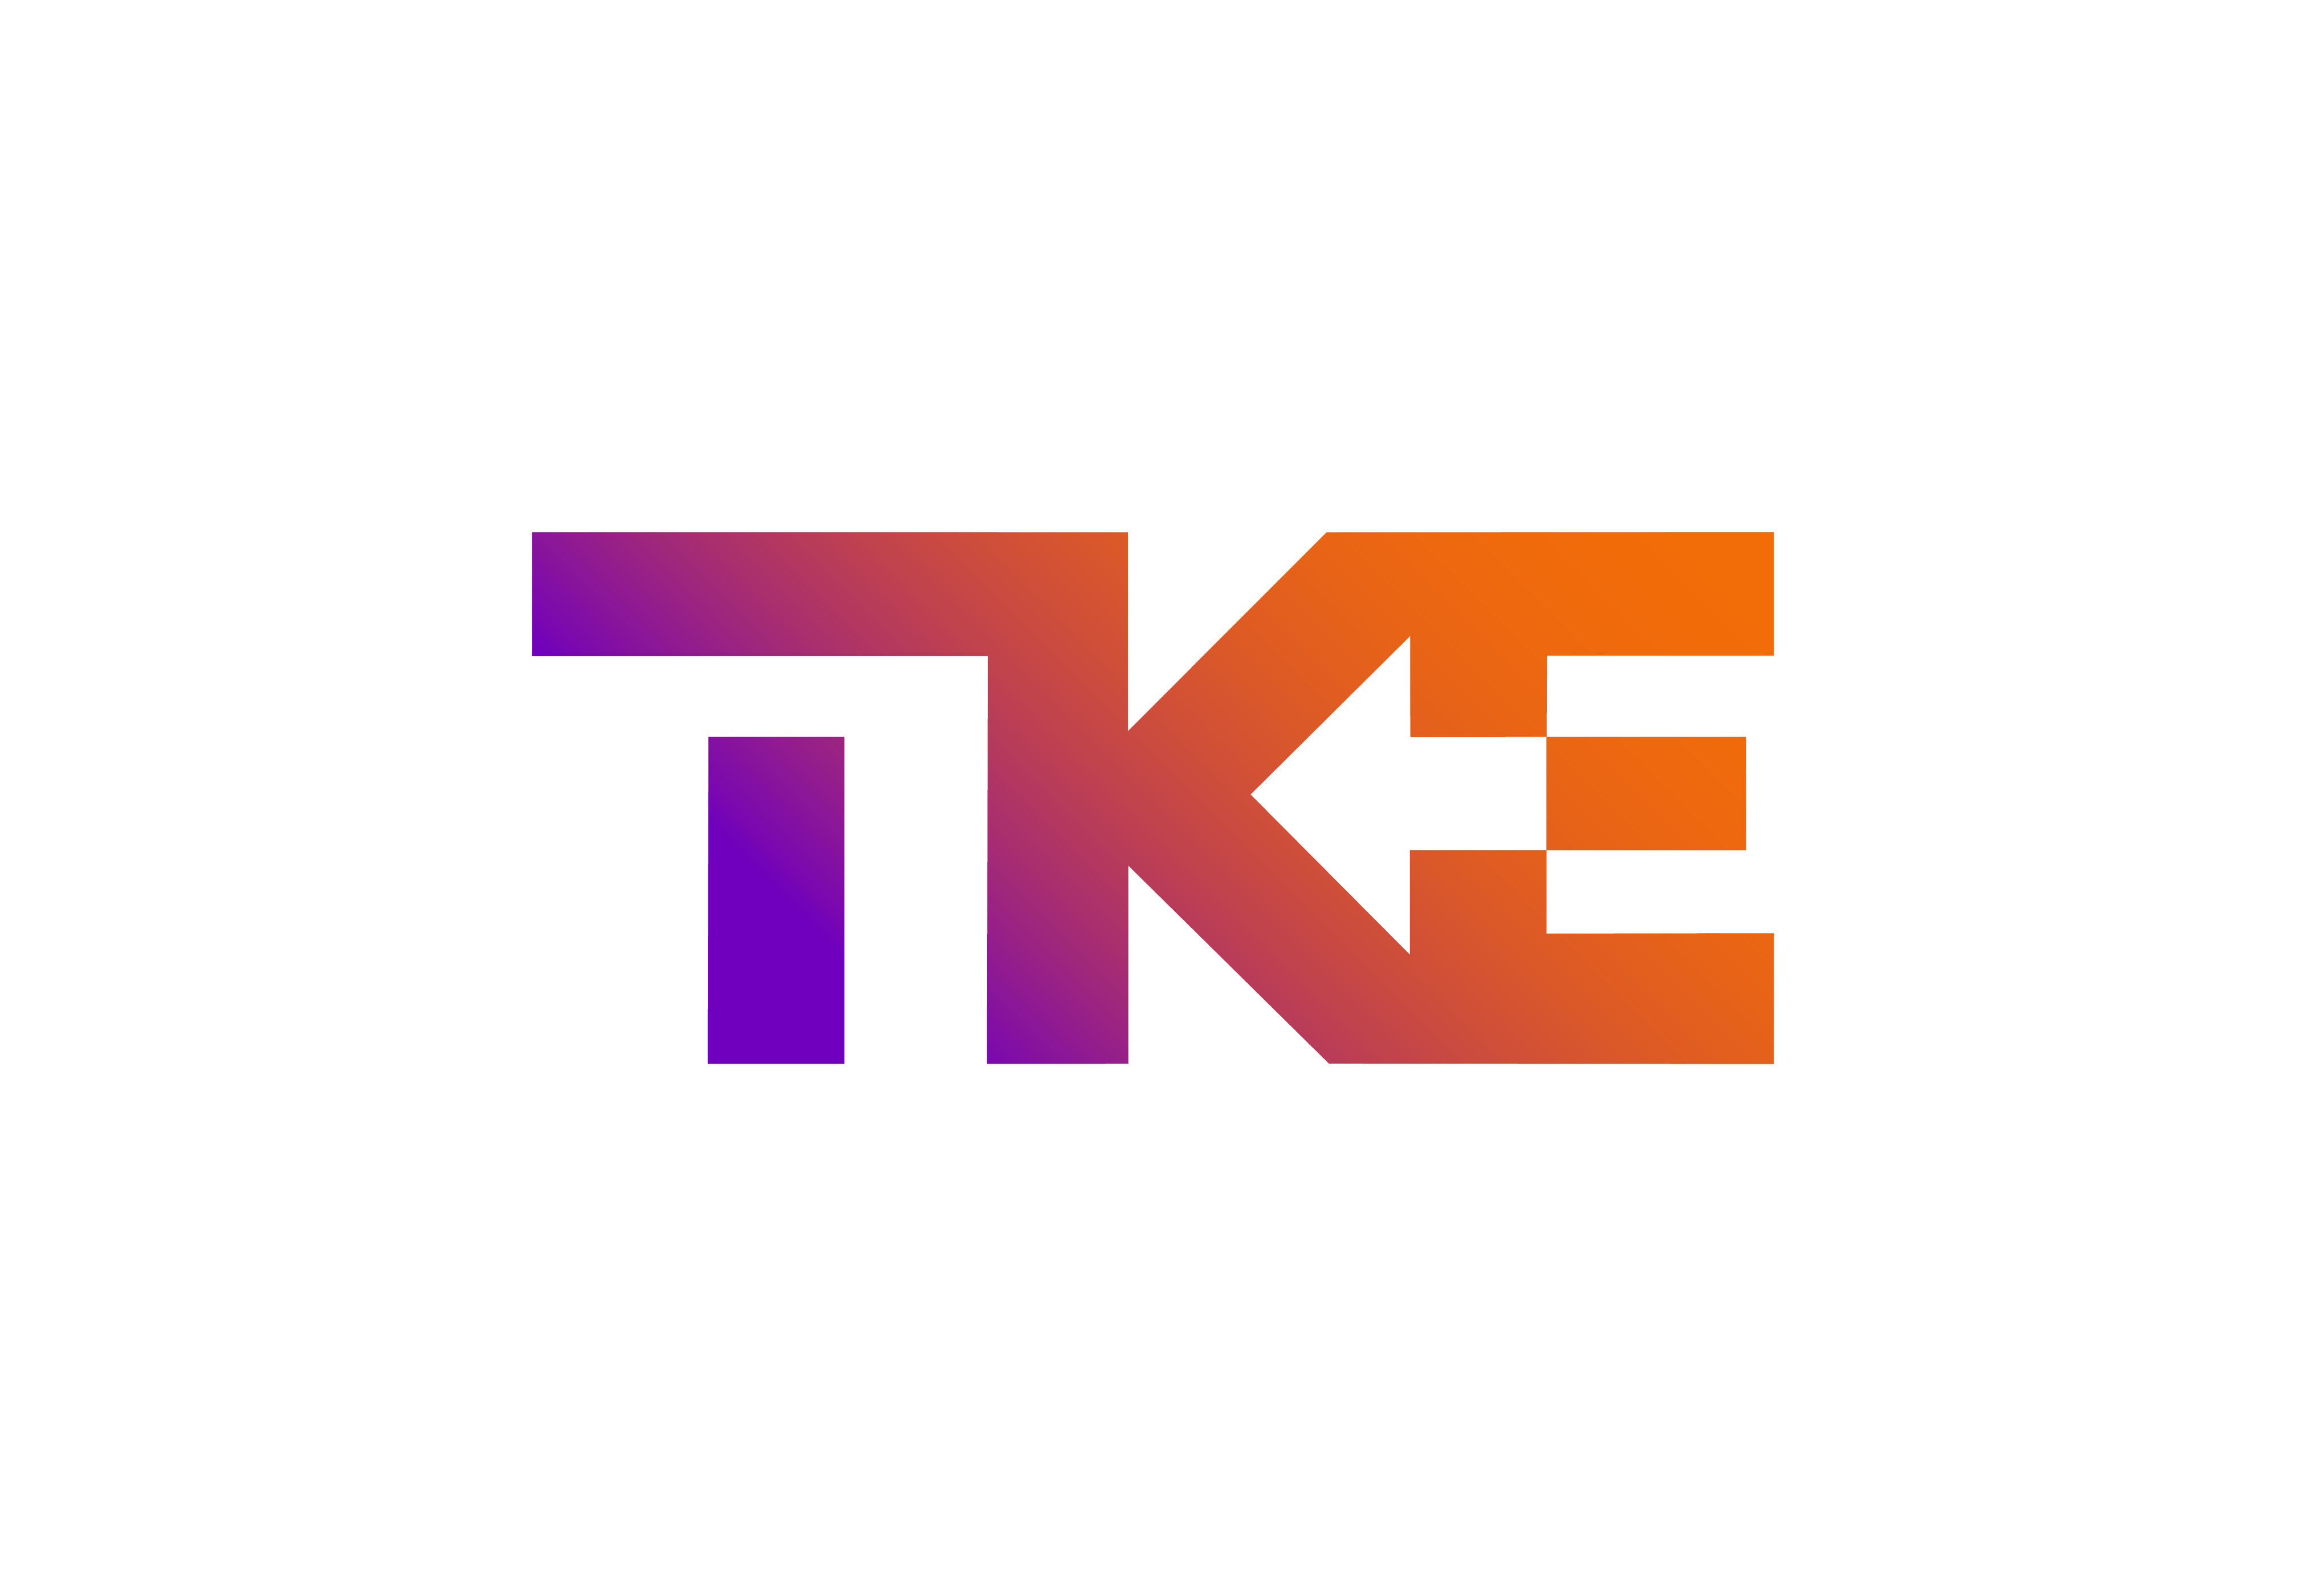 TKE logo hyperlinked to website.